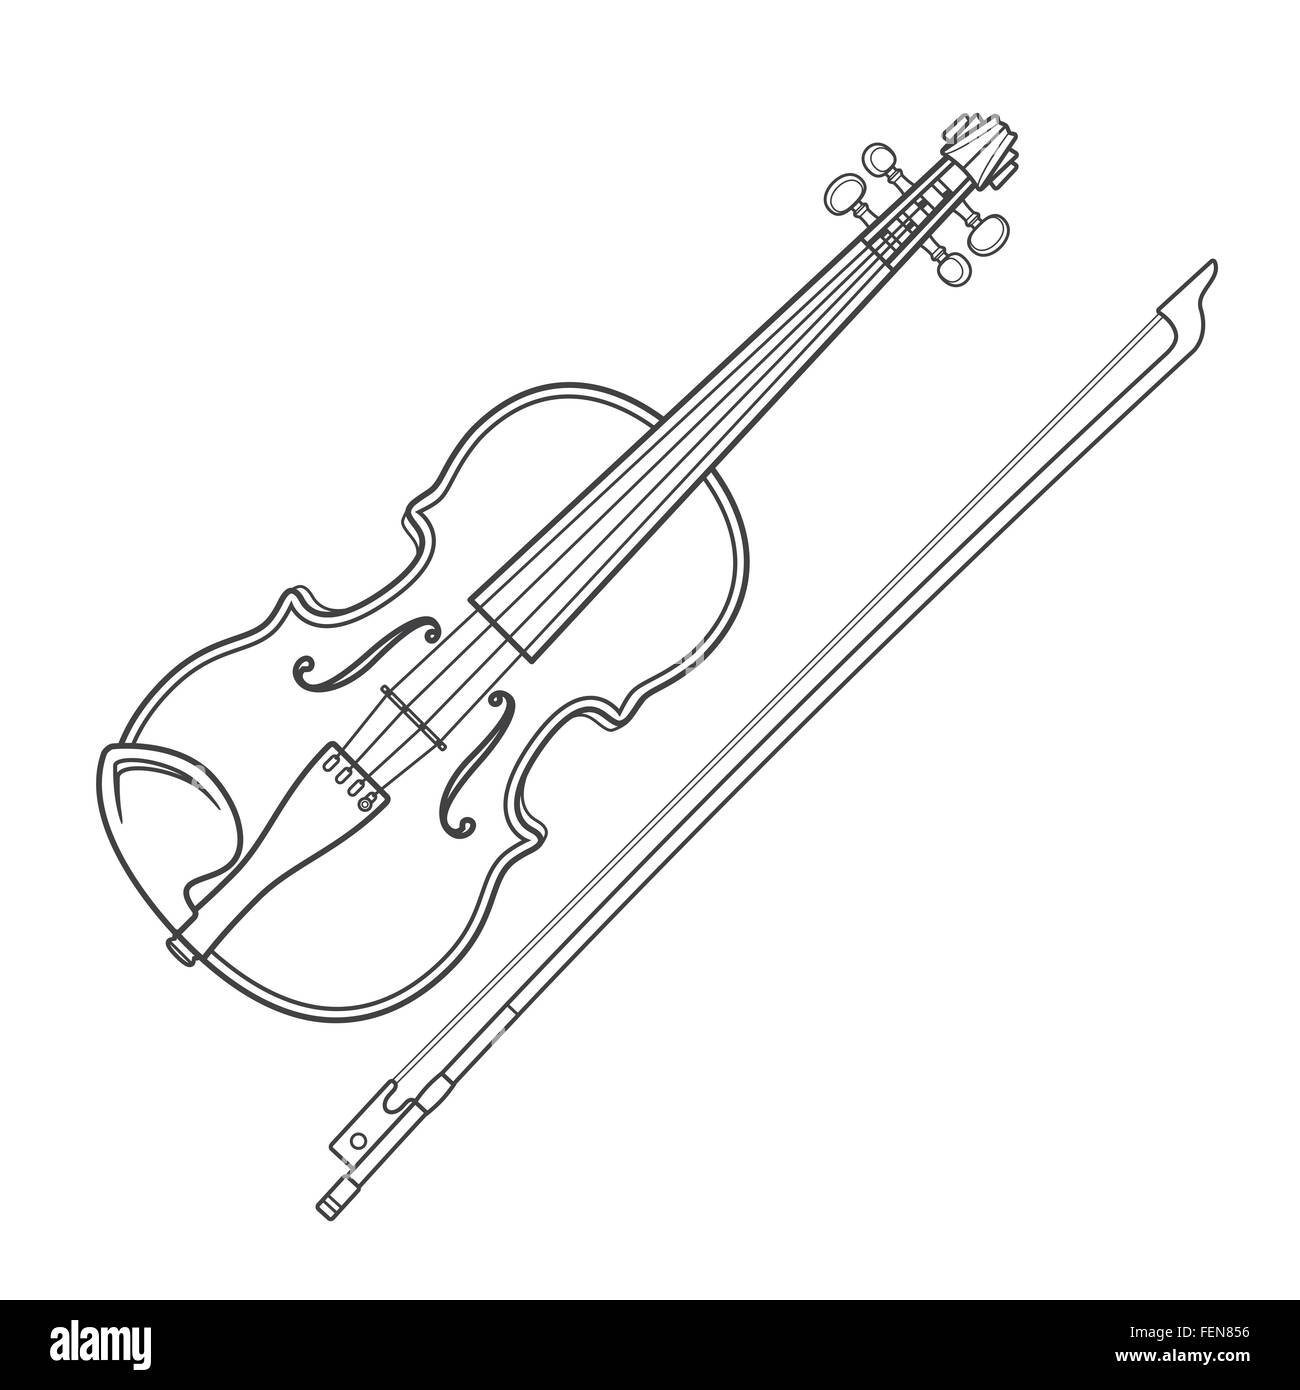 Контур скрипки со смычком